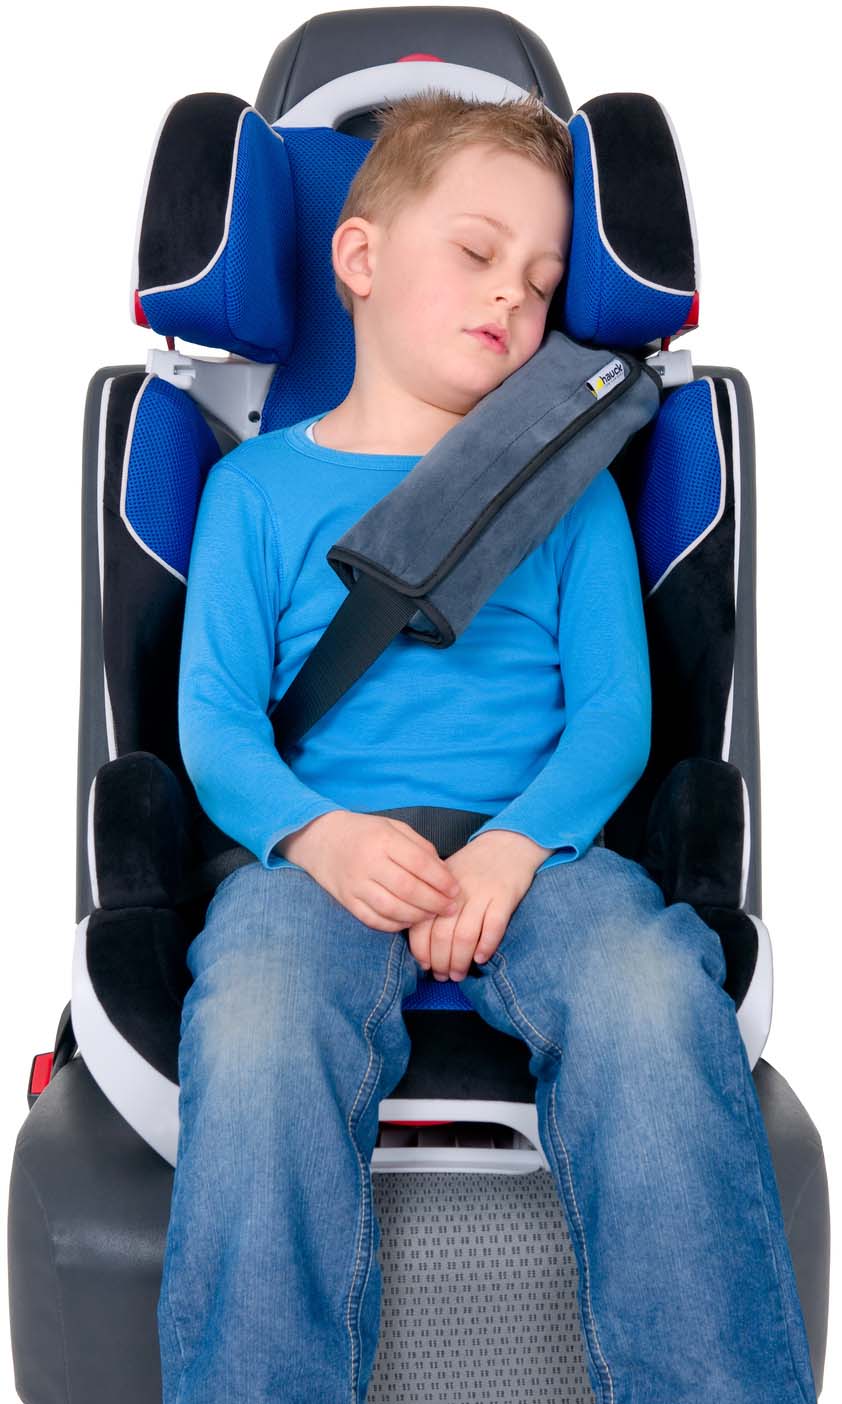 Safety belt cushion